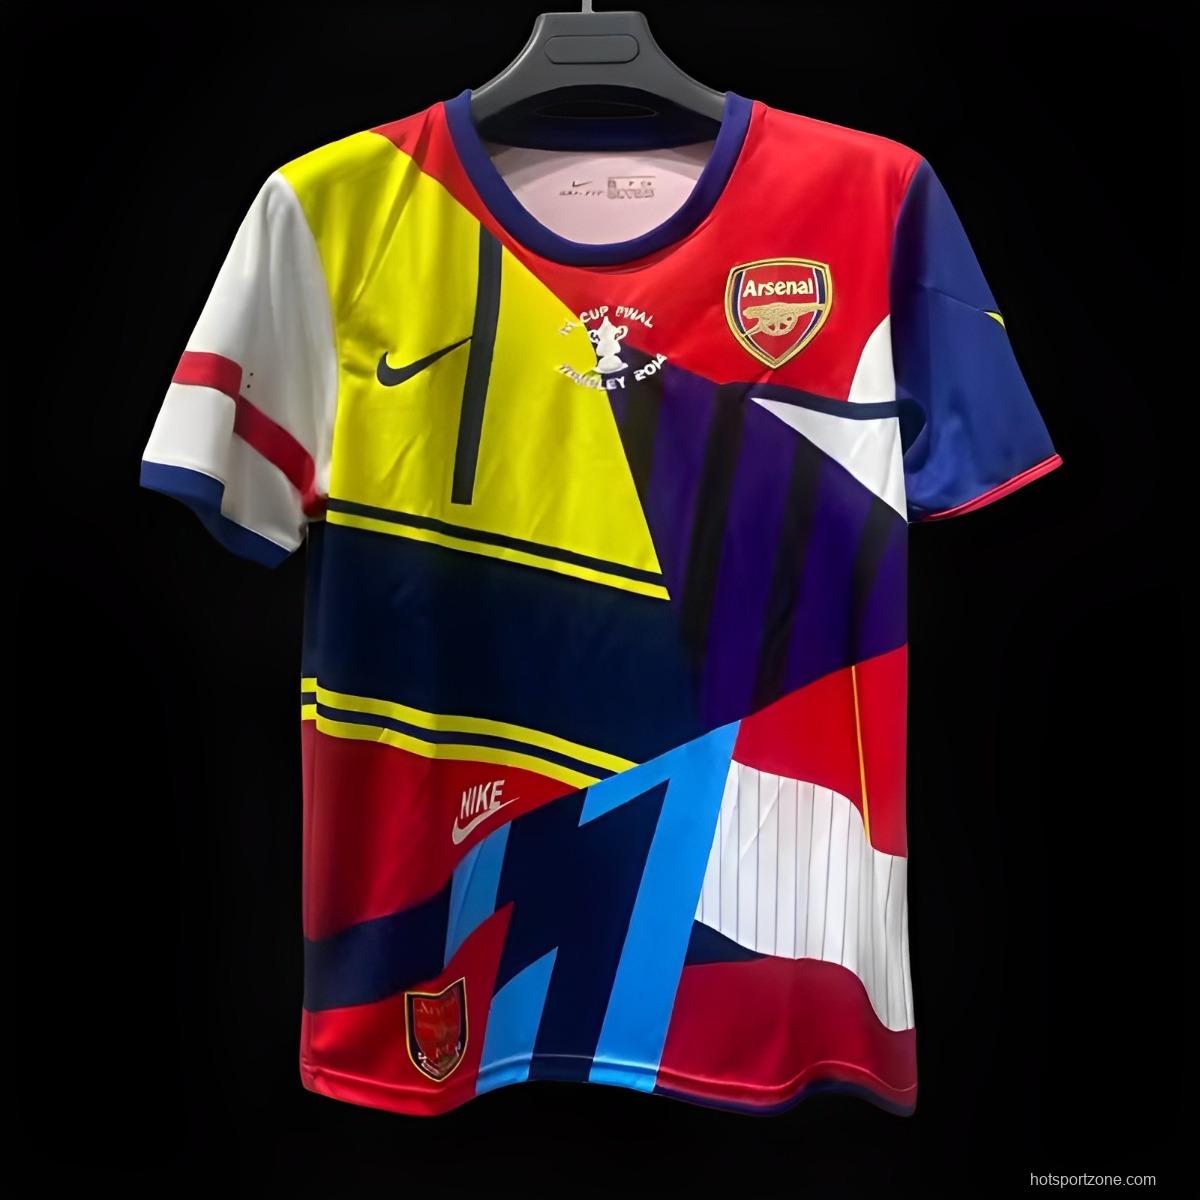 Retro 13/14 Arsenal FA Cup Multi Colors Limited Edition Jersey